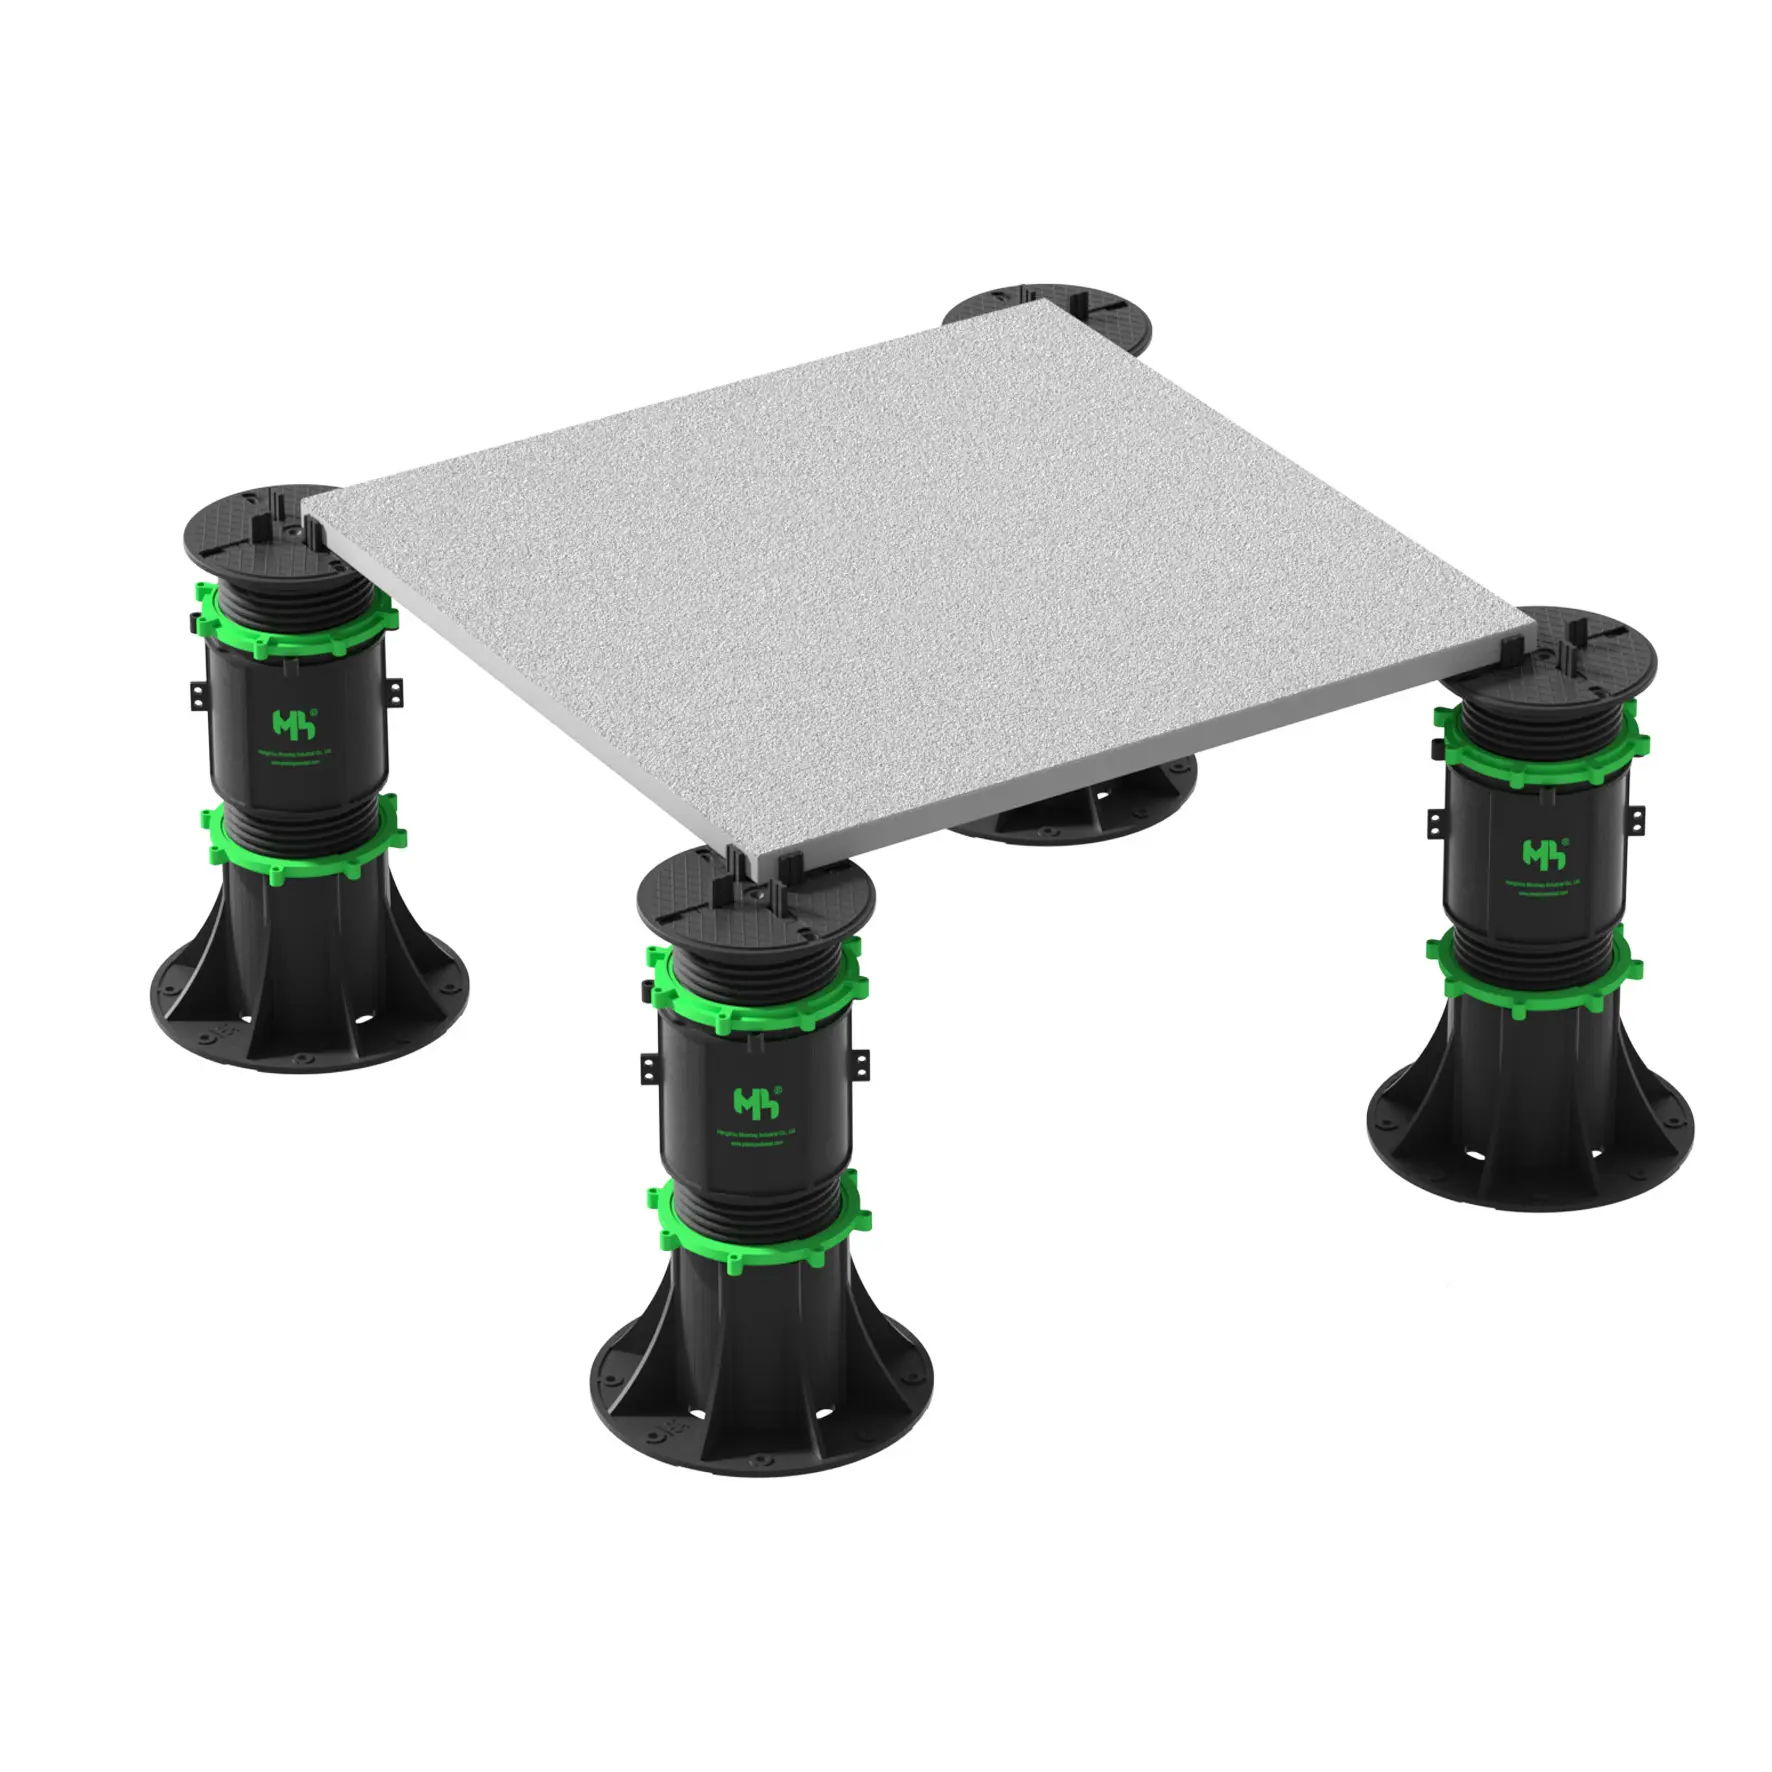 Different height adjustable floor joist paver tile deck support